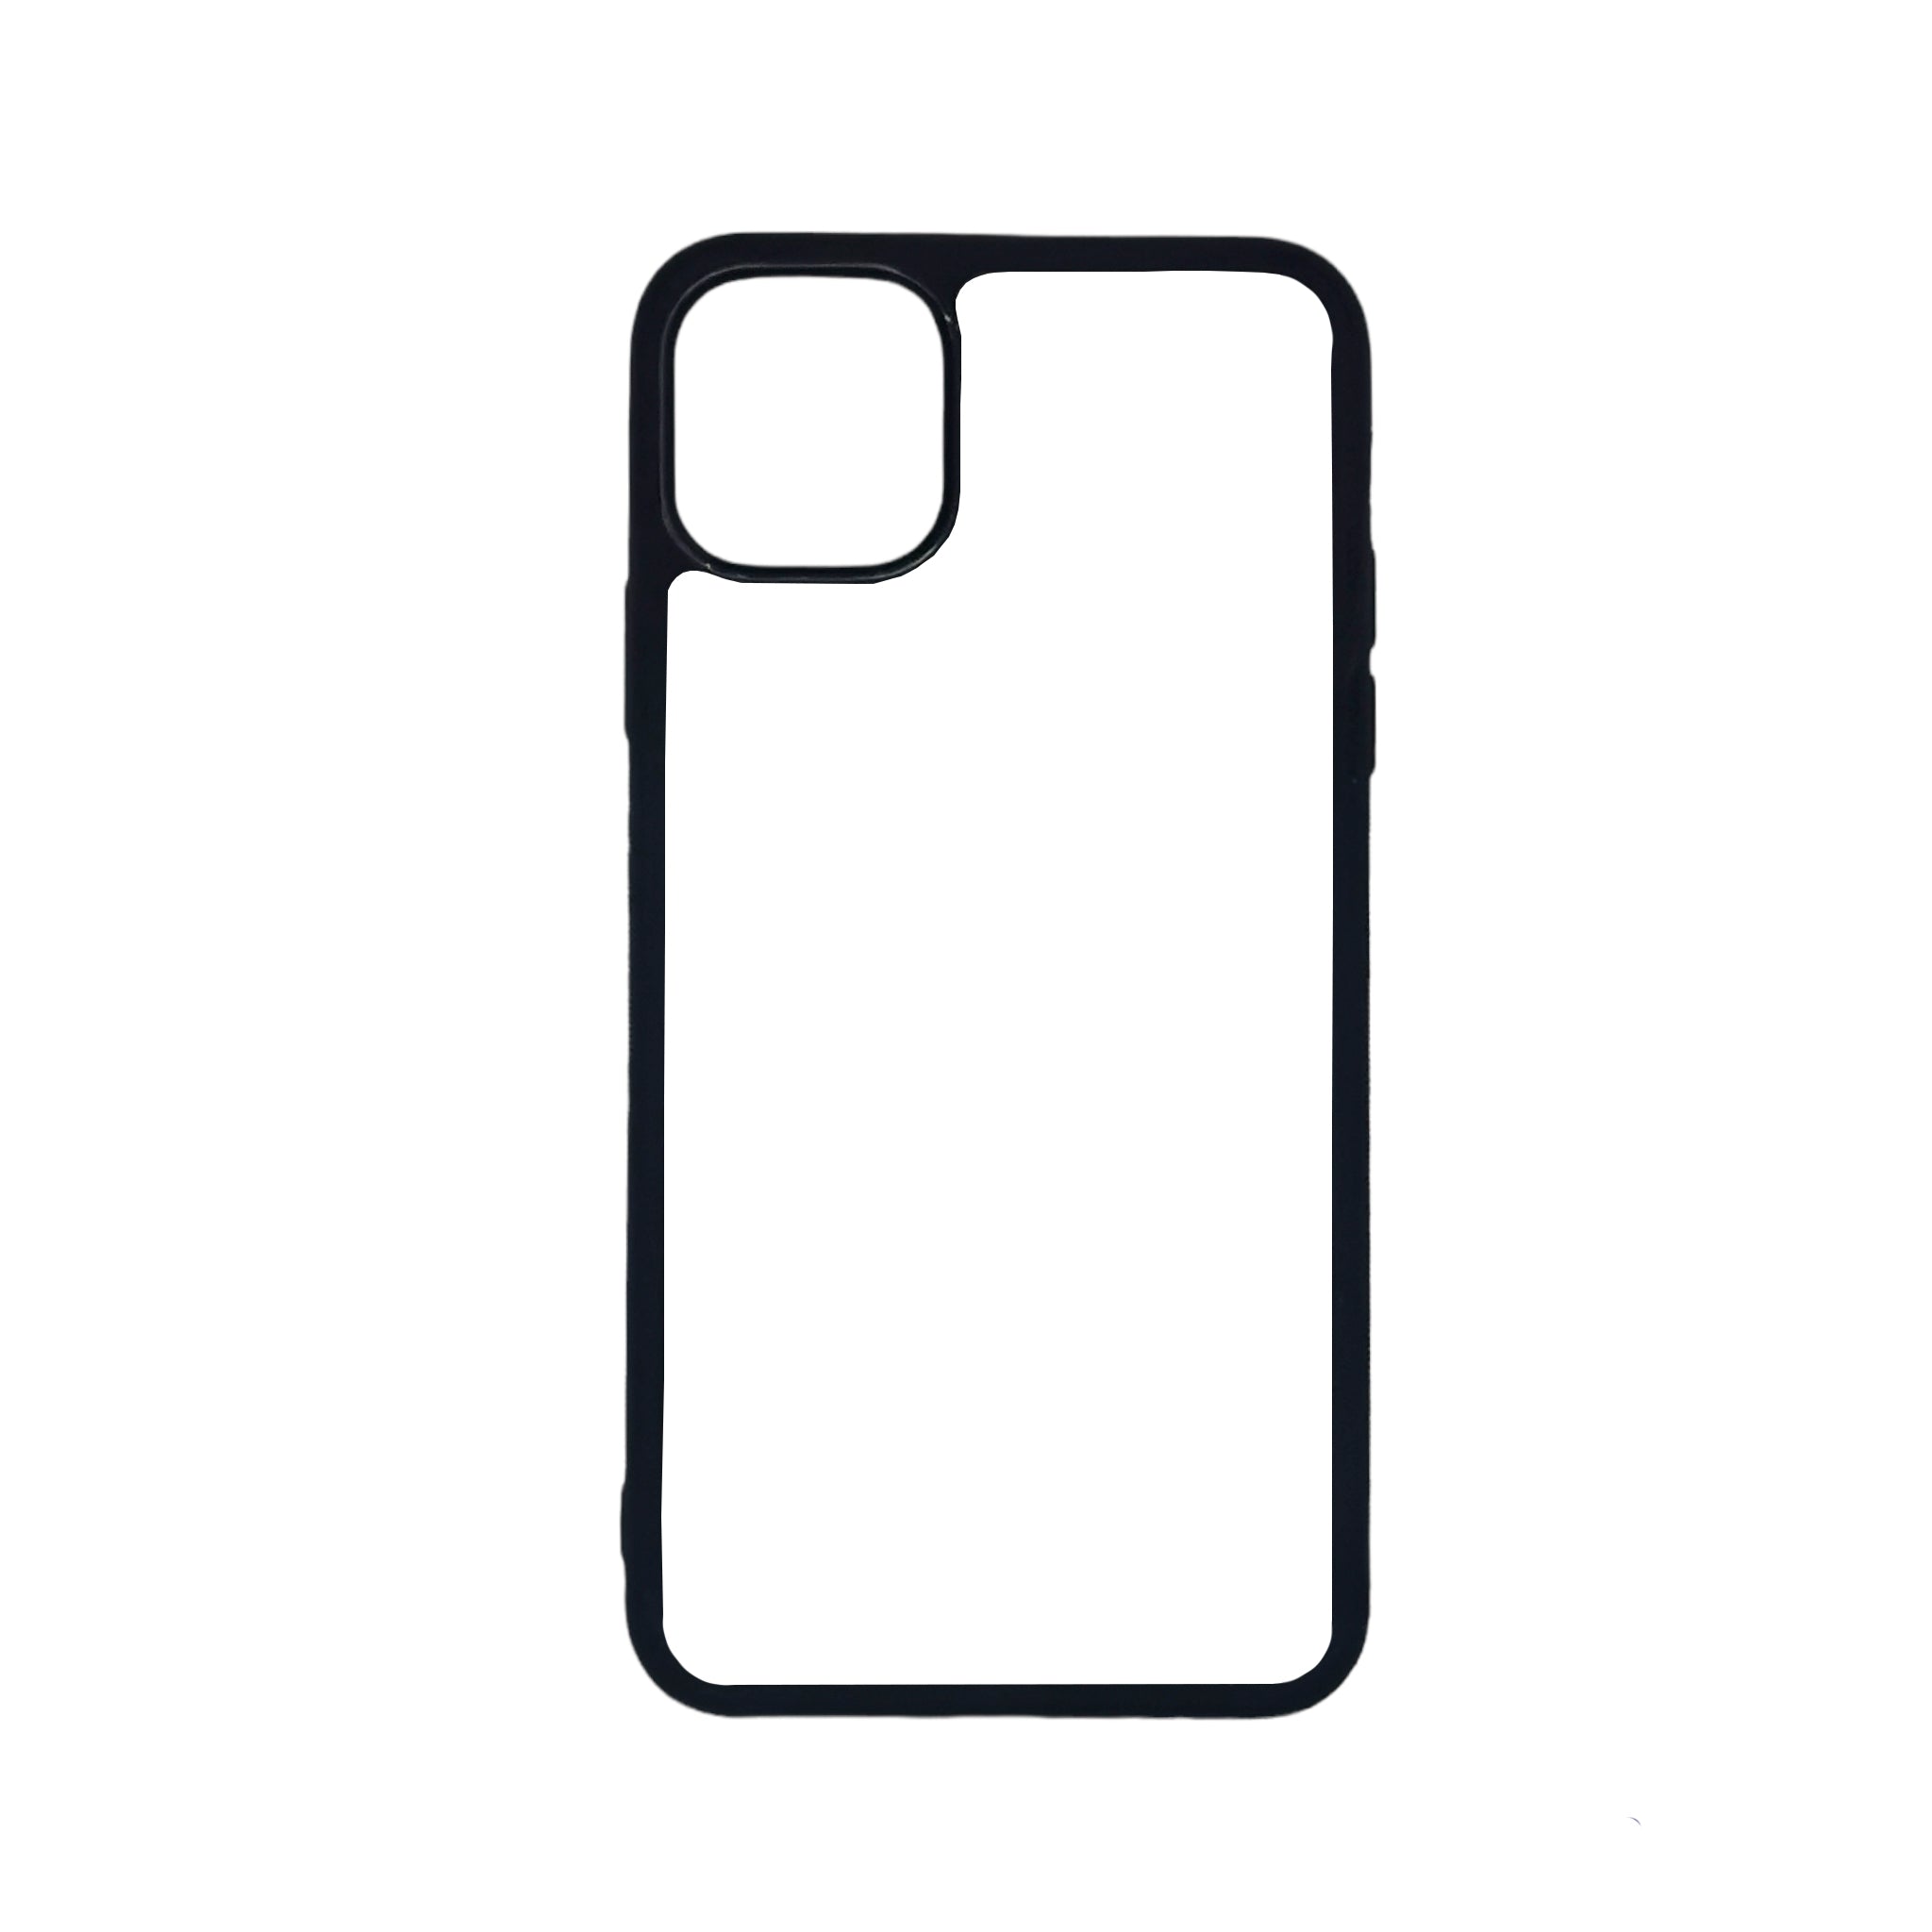 iPhone 11 Pro Max - Black TPU Rubber Sublimation Phone Case